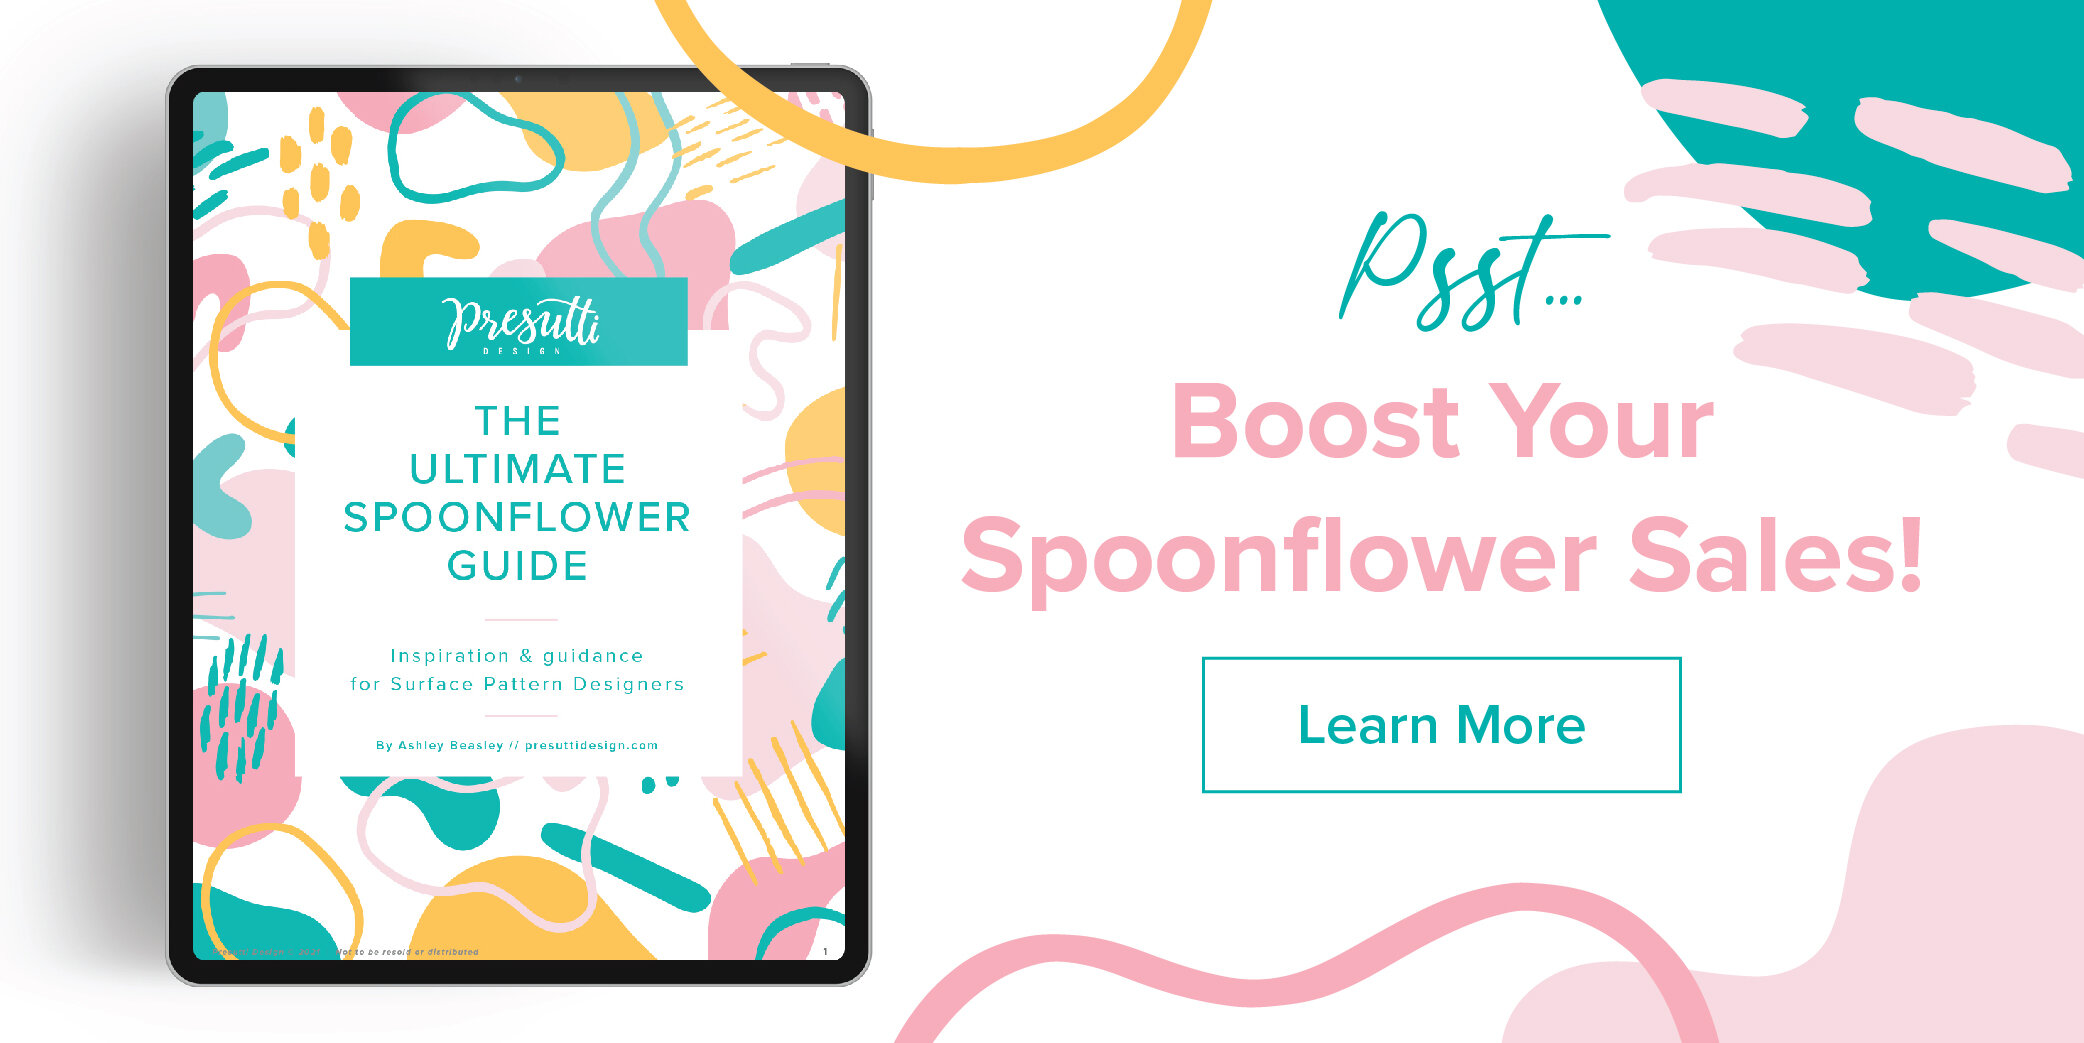 How to Save Money On Spoonflower Fabric — PRESUTTI DESIGN